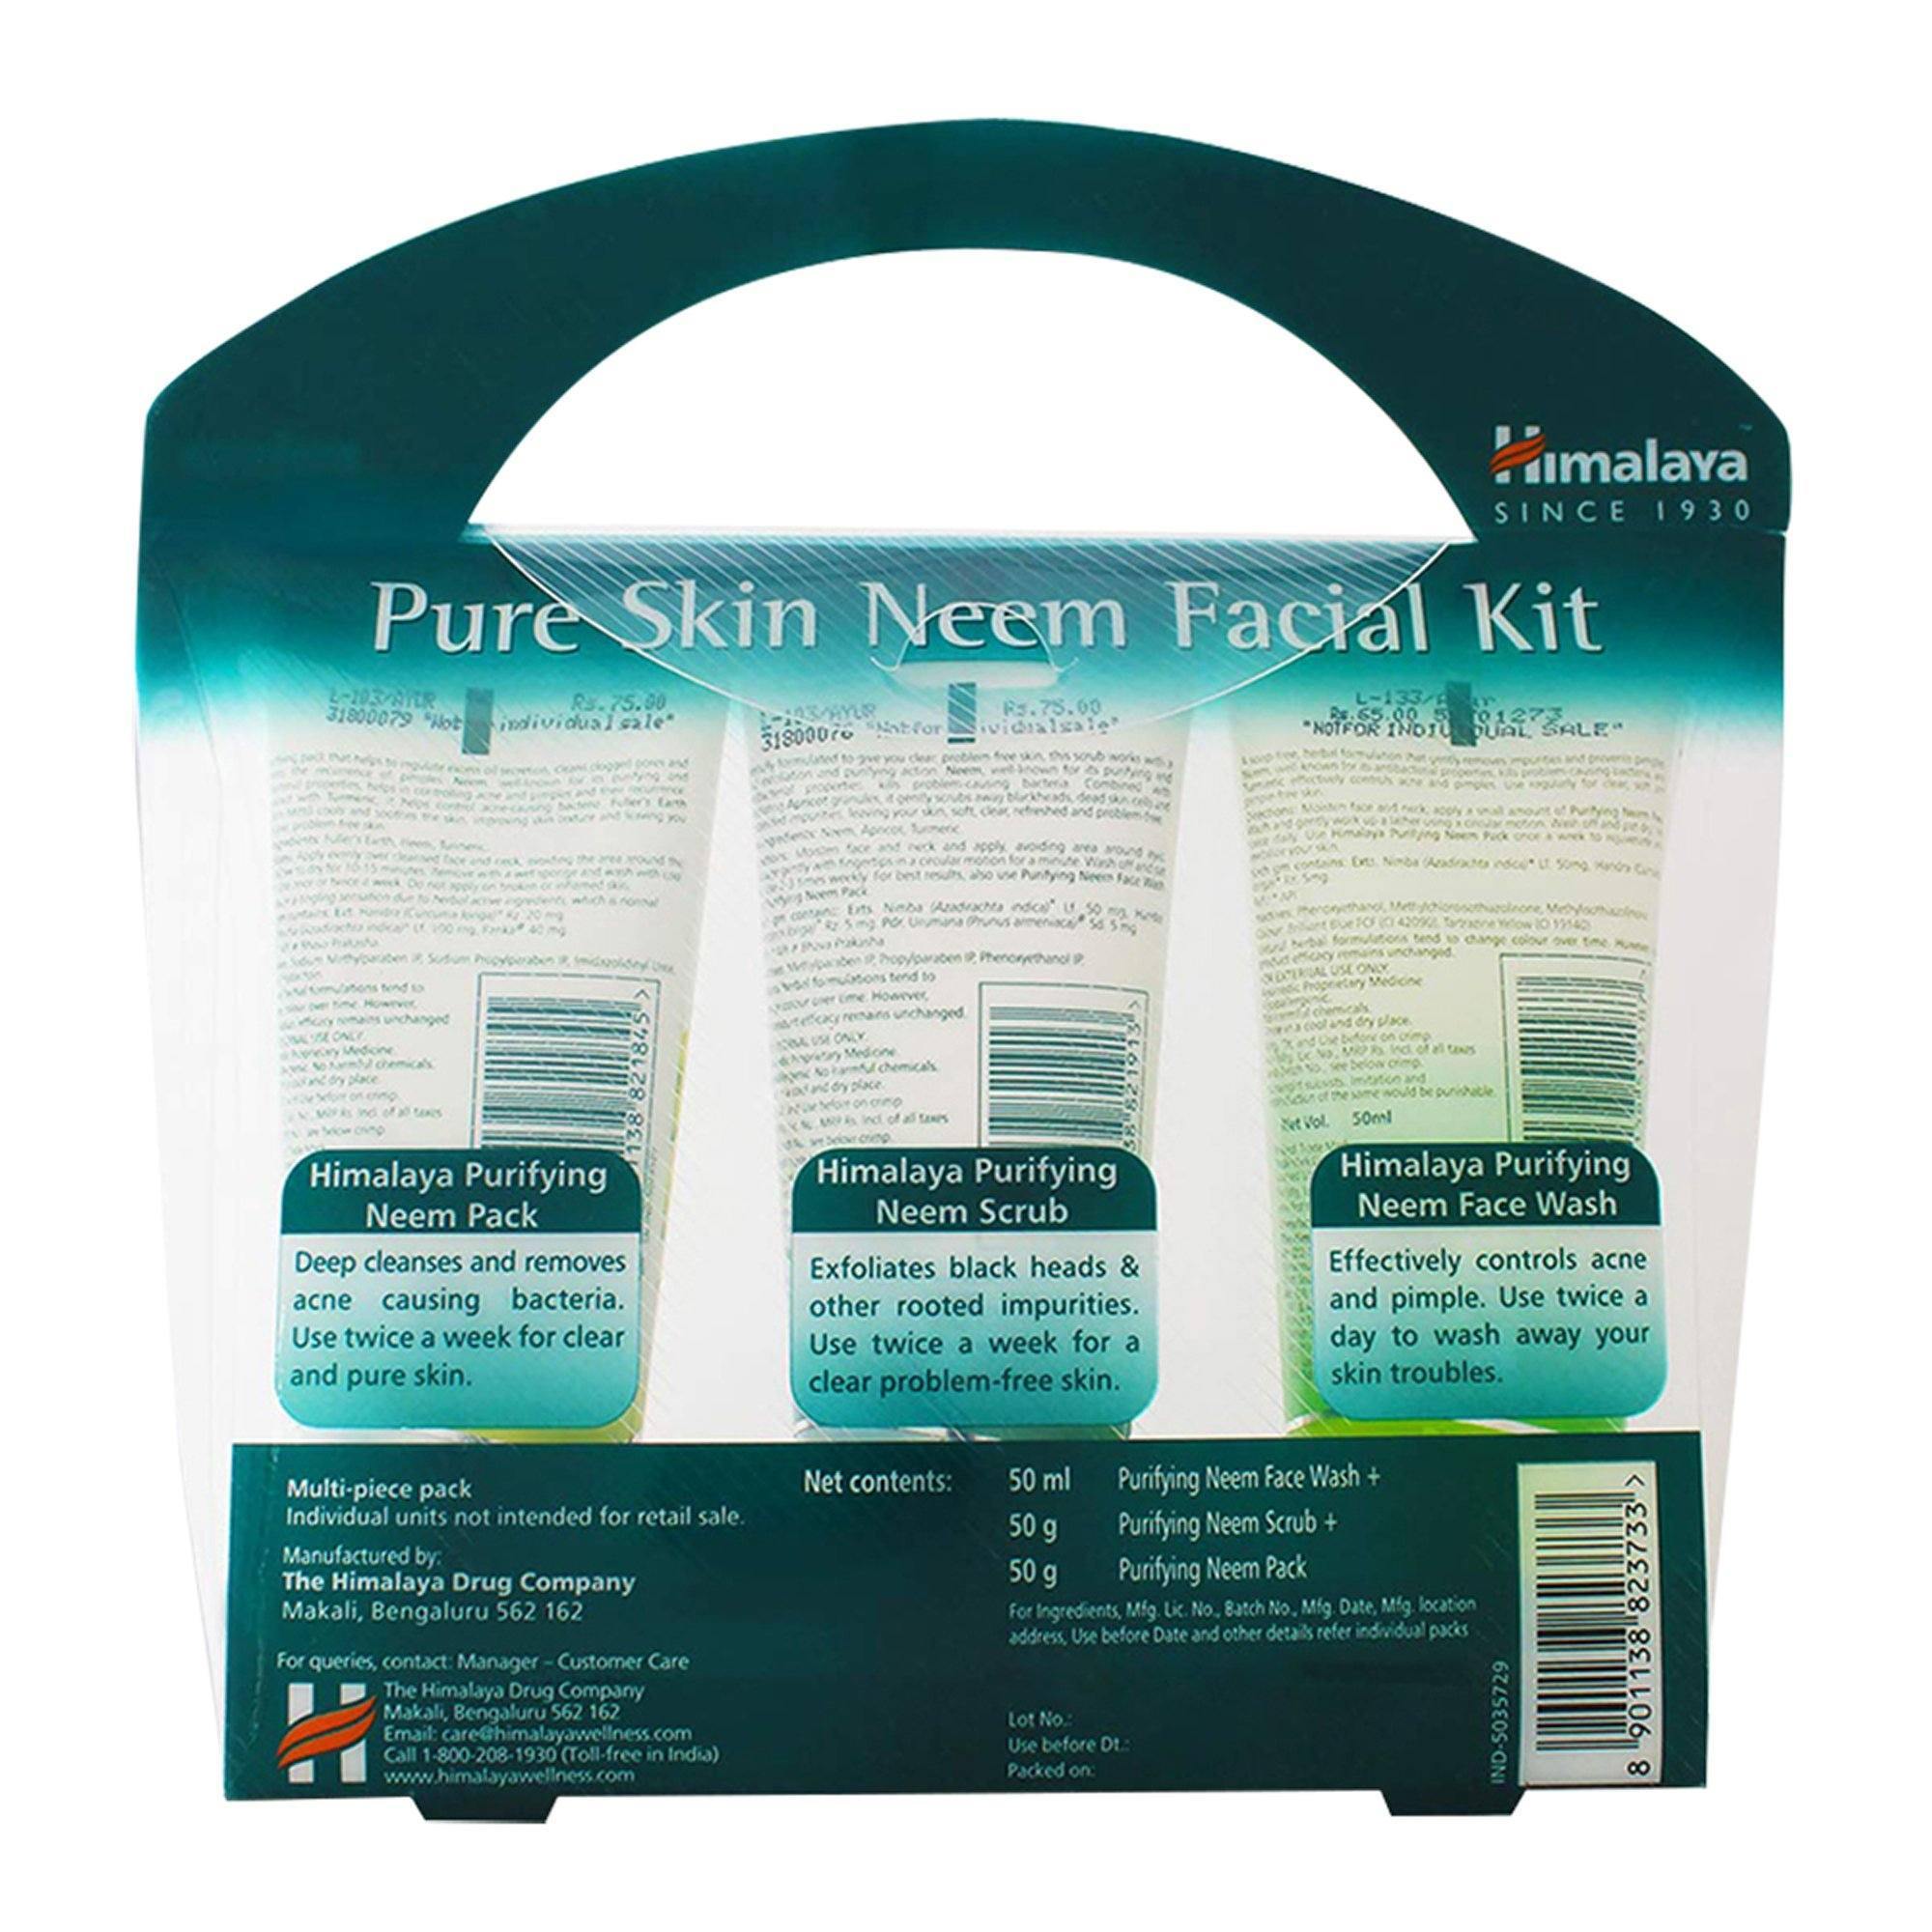 Himalaya Pure Skin Neem Facial Kit - Product Ingredients